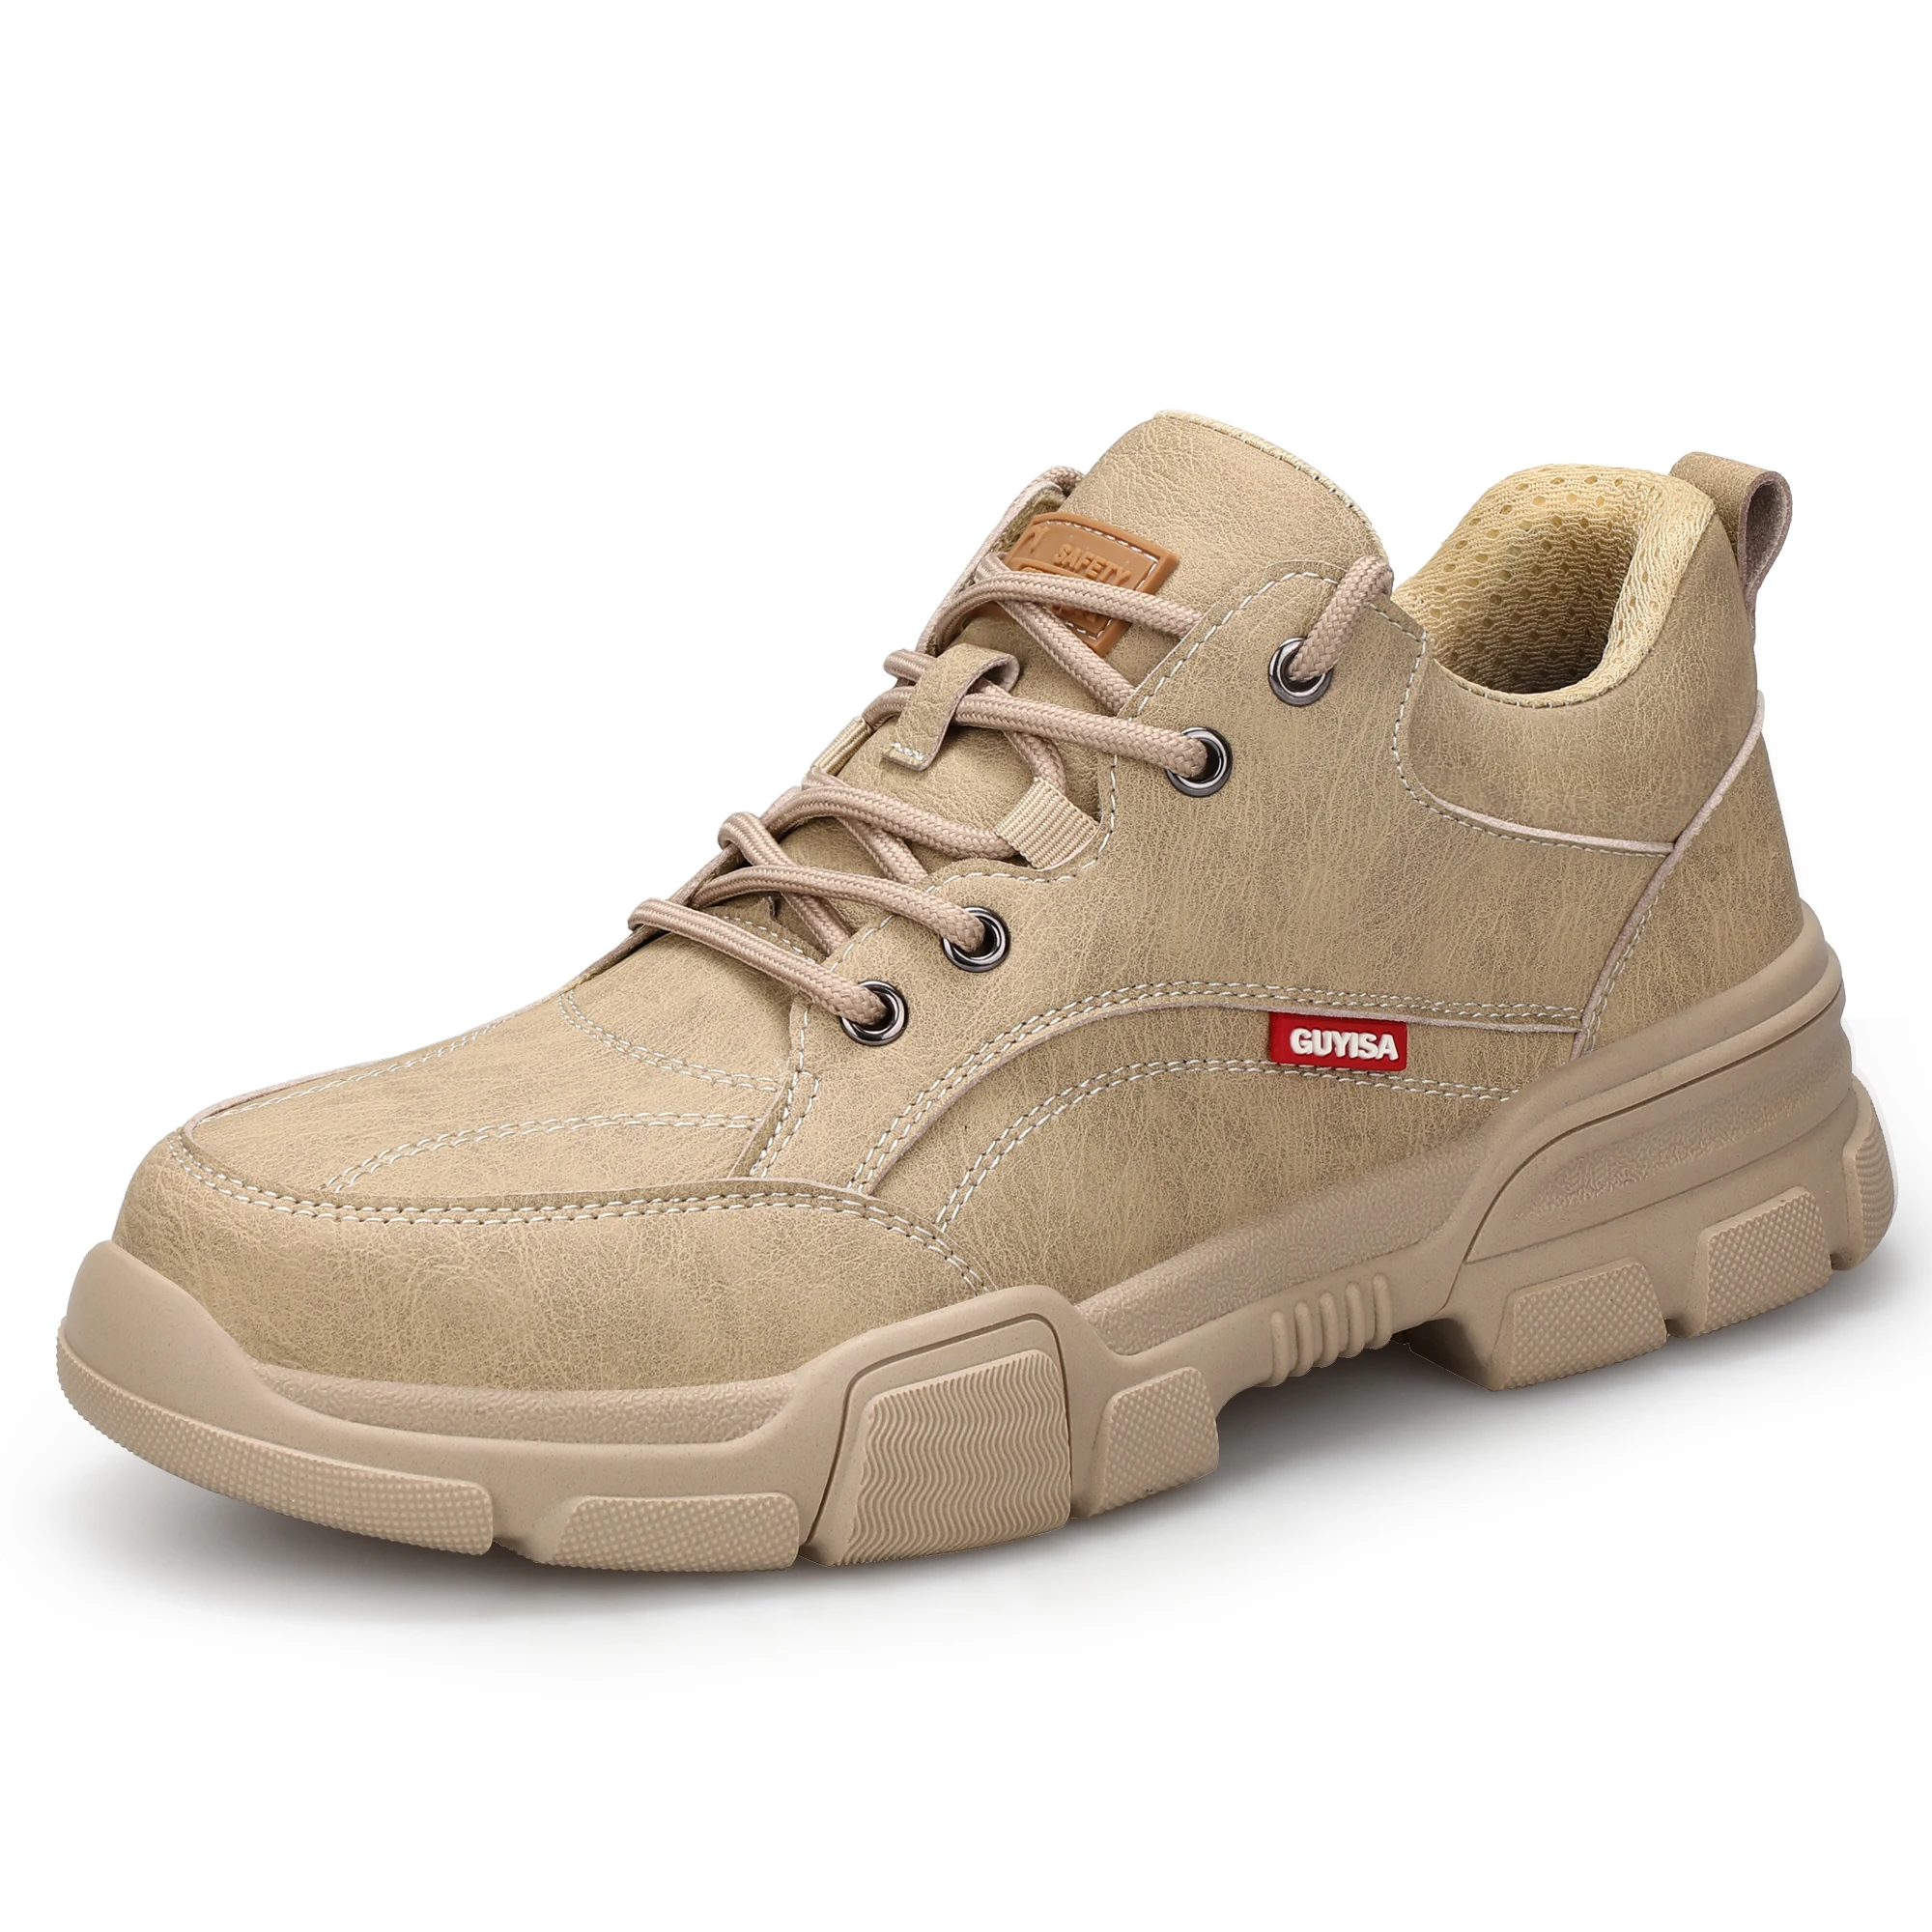 Steel Toe Boots for Men  Work Boots Indestructible Work Shoes Desert Com... - $266.14